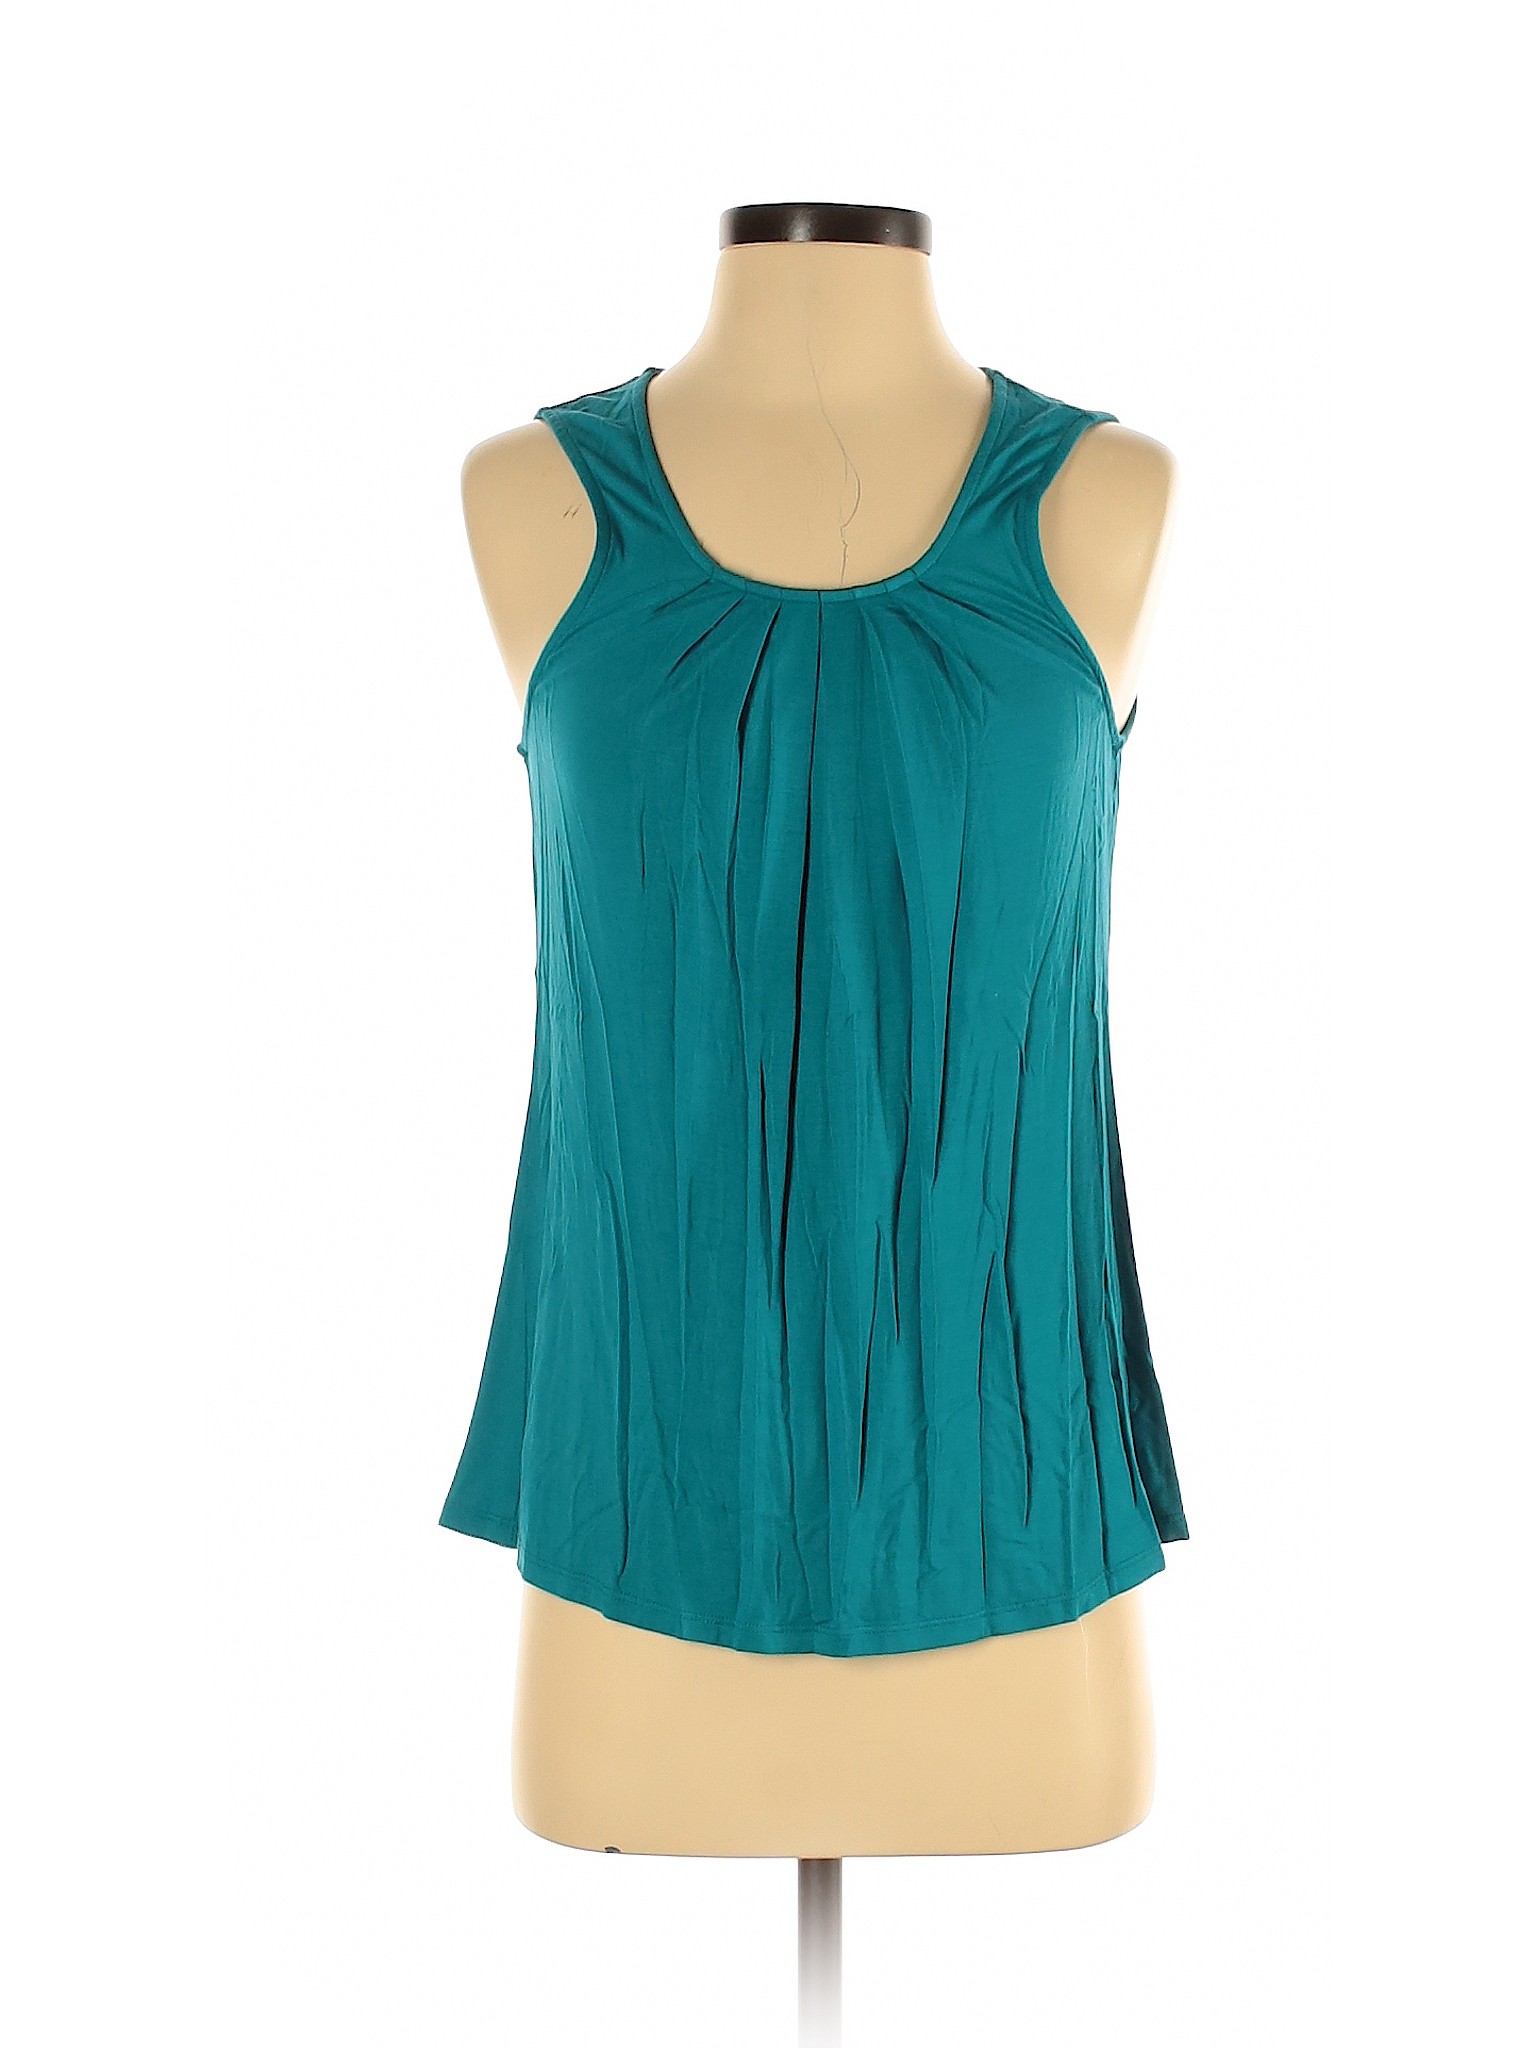 41Hawthorn Women Green Sleeveless Top S | eBay